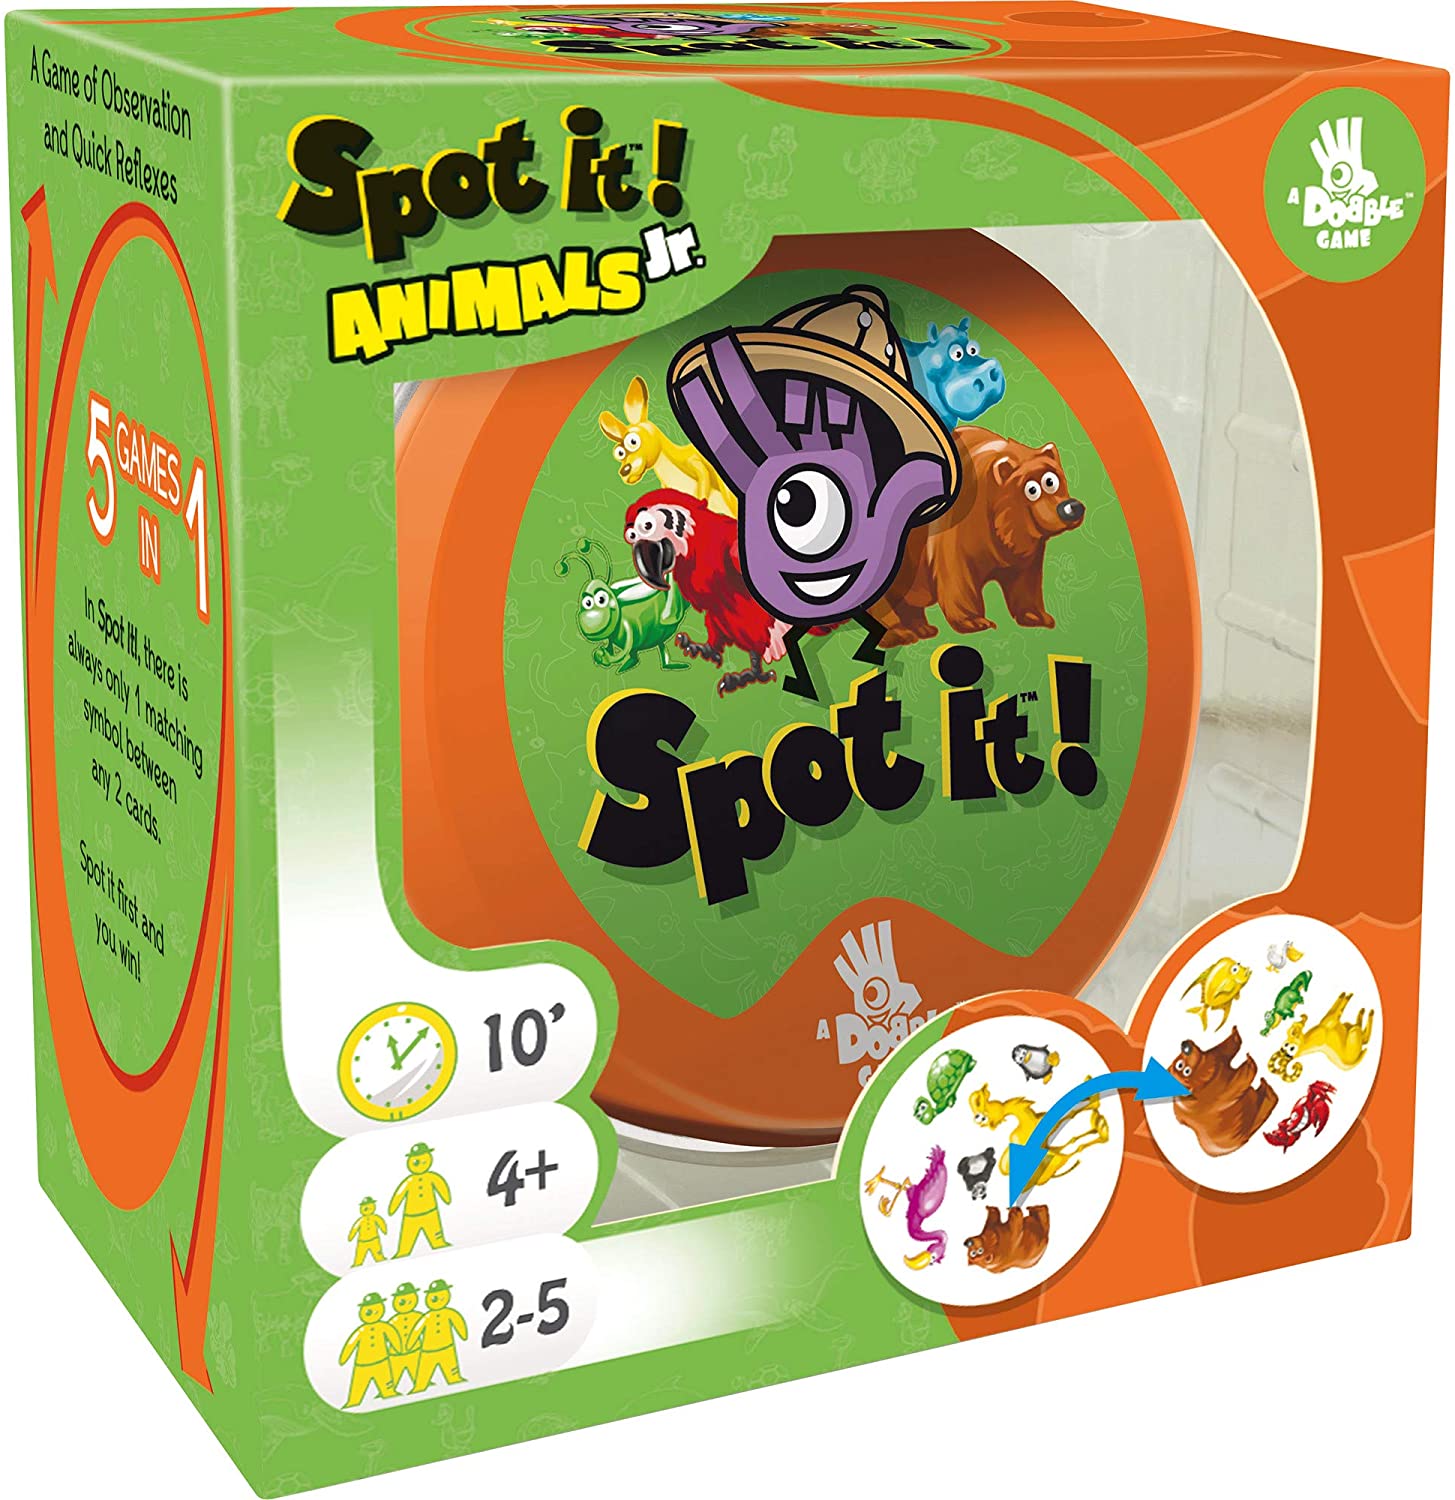 Spot It Jr.! Animals【海外輸入品】【ラッピング不可】【輸送時の箱破れがありますが新品未開封です】